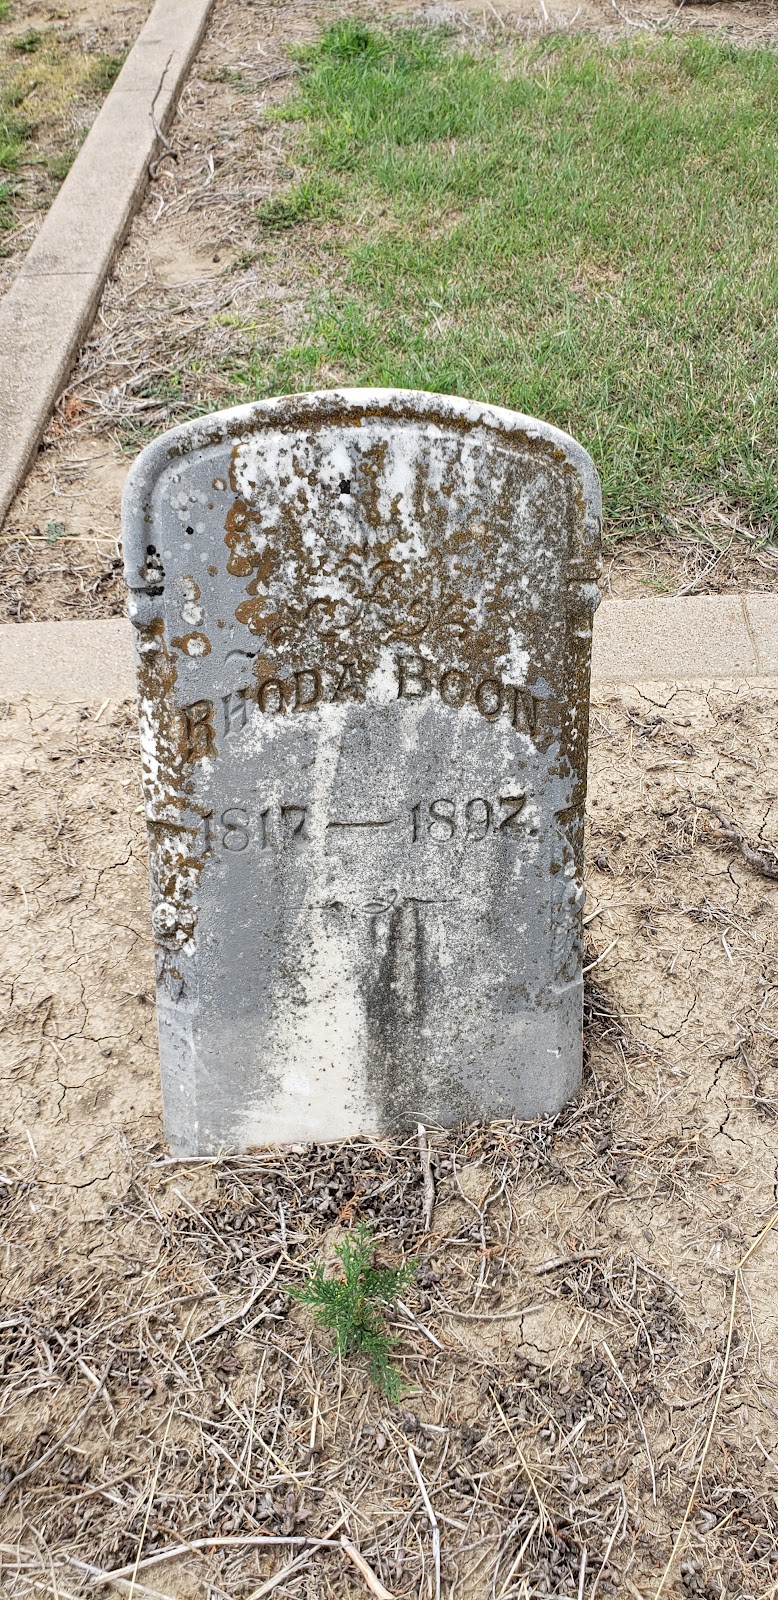 Birdville Cemetery | 6100 Cemetery Rd, Haltom City, TX 76117 | Phone: (817) 705-6532